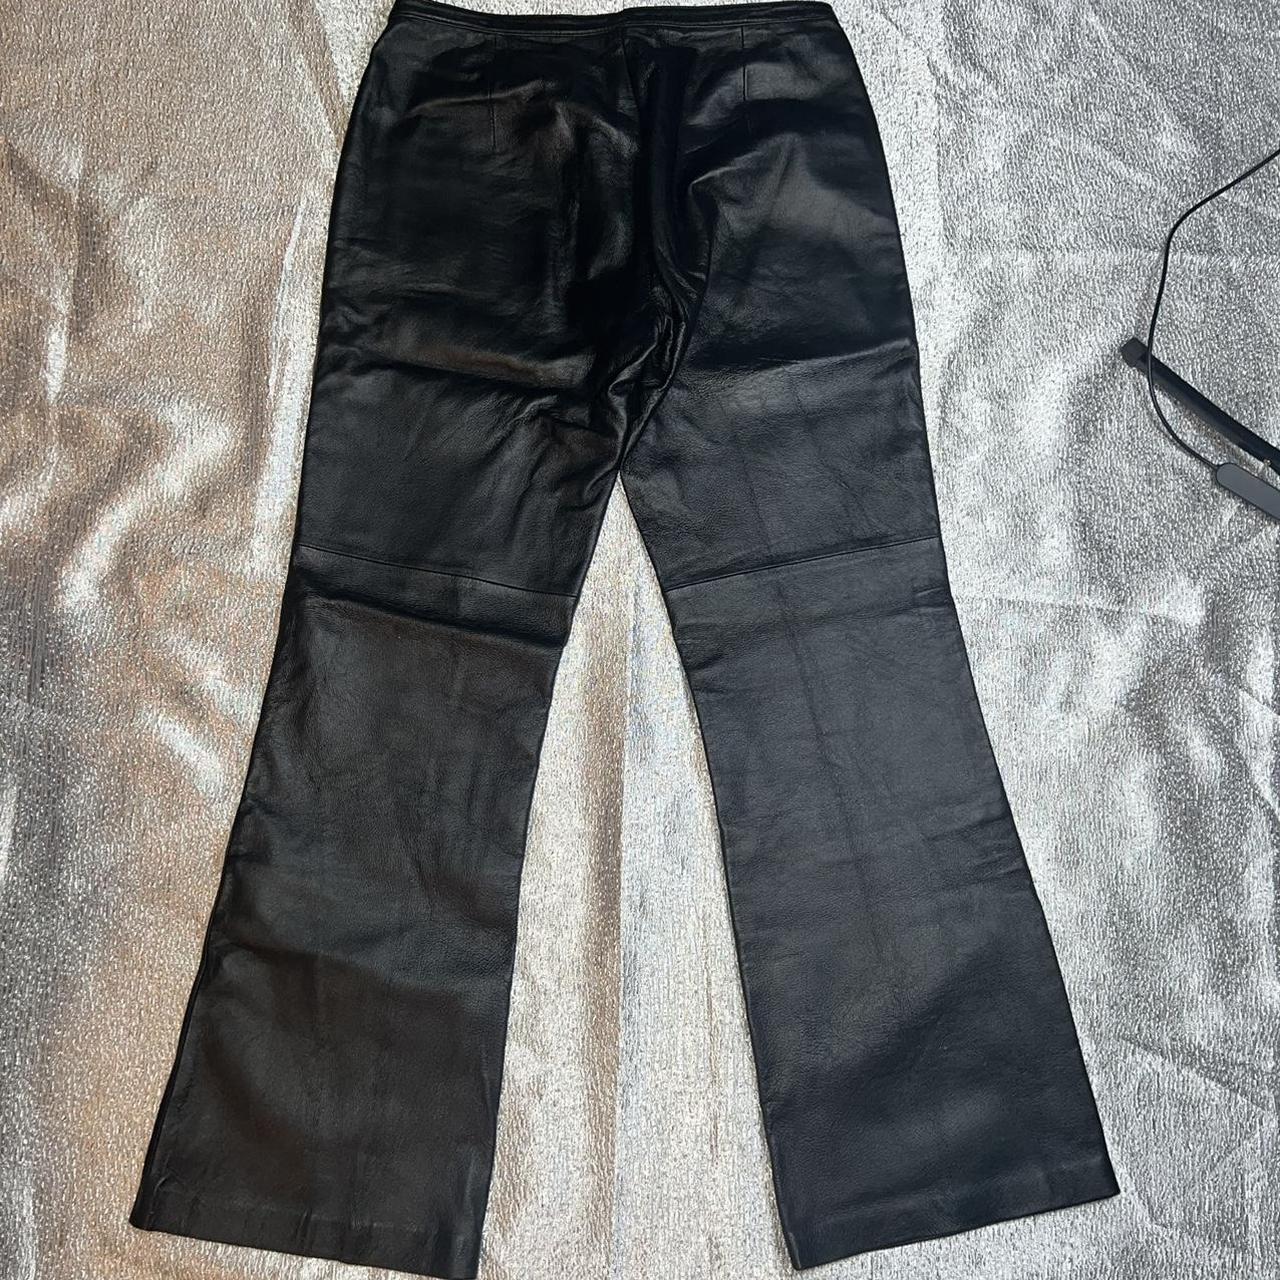 Cami International Genuine Black leather pants in a... - Depop